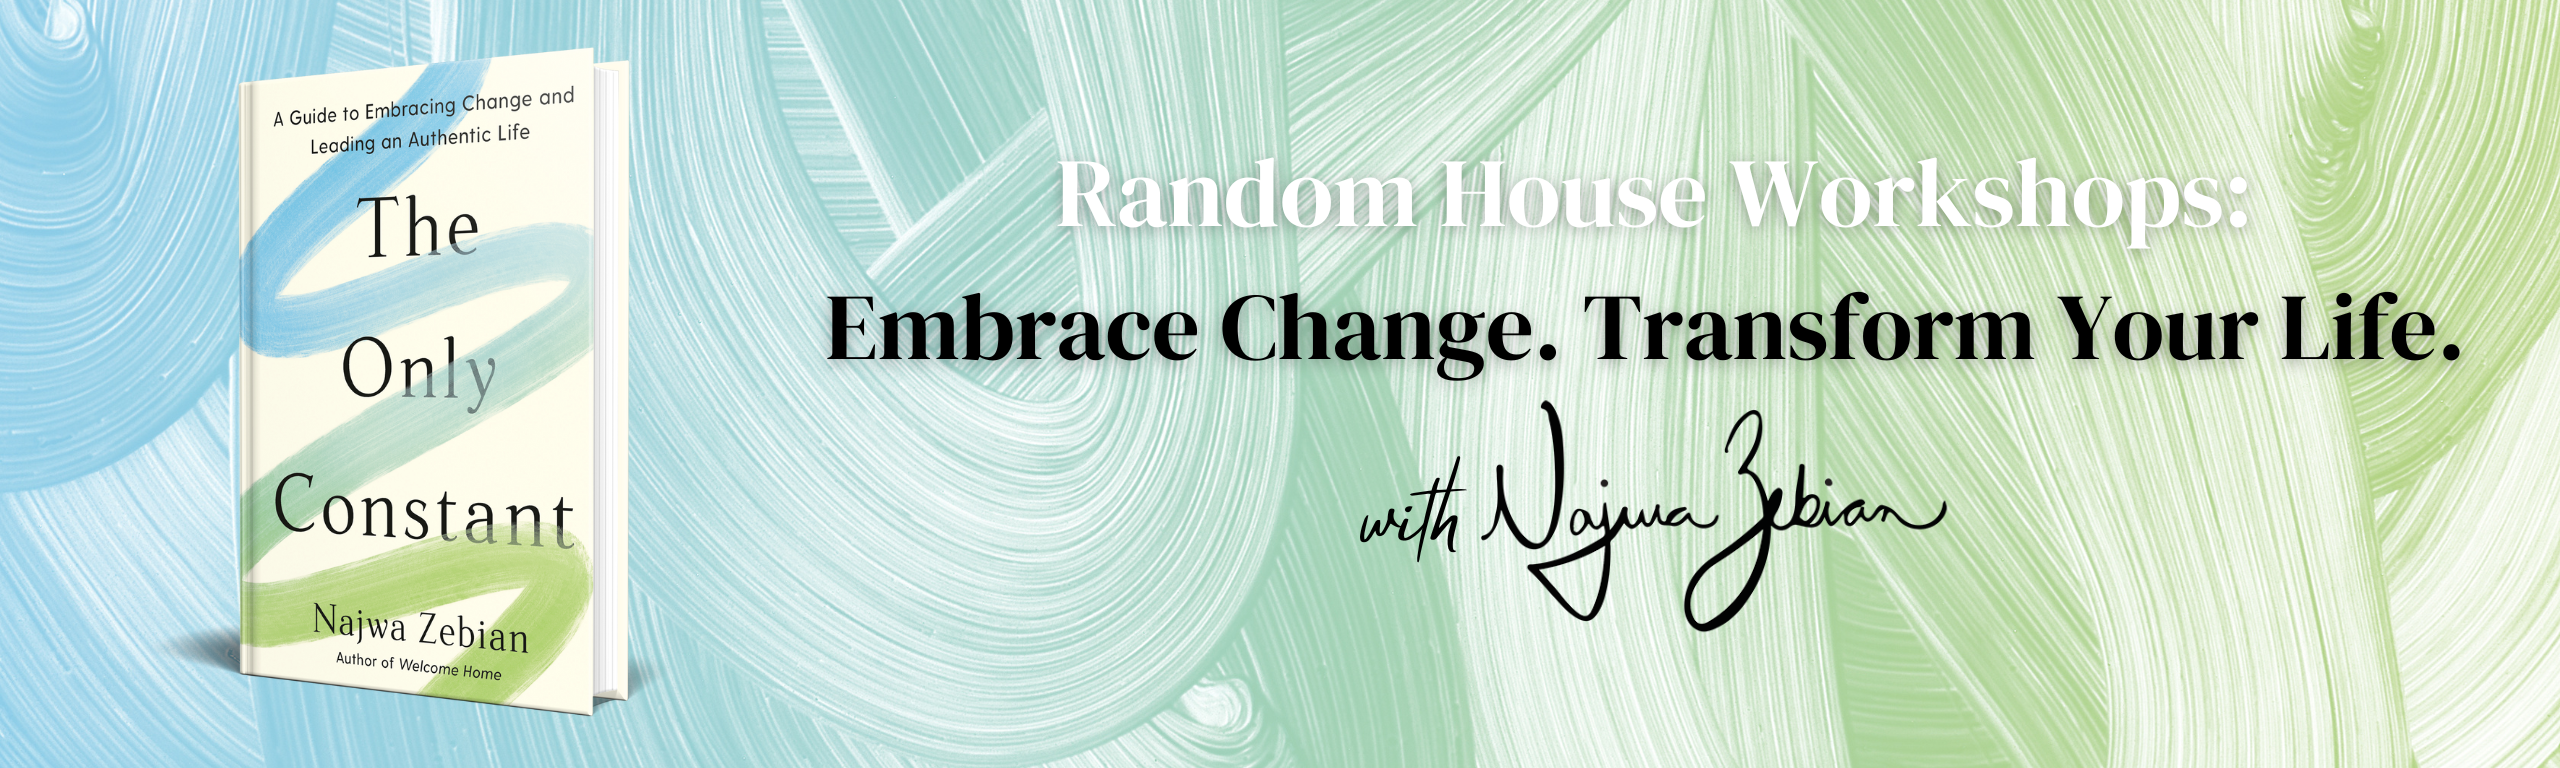 Random House Workshops: Embrace Change. Transform Your Life.